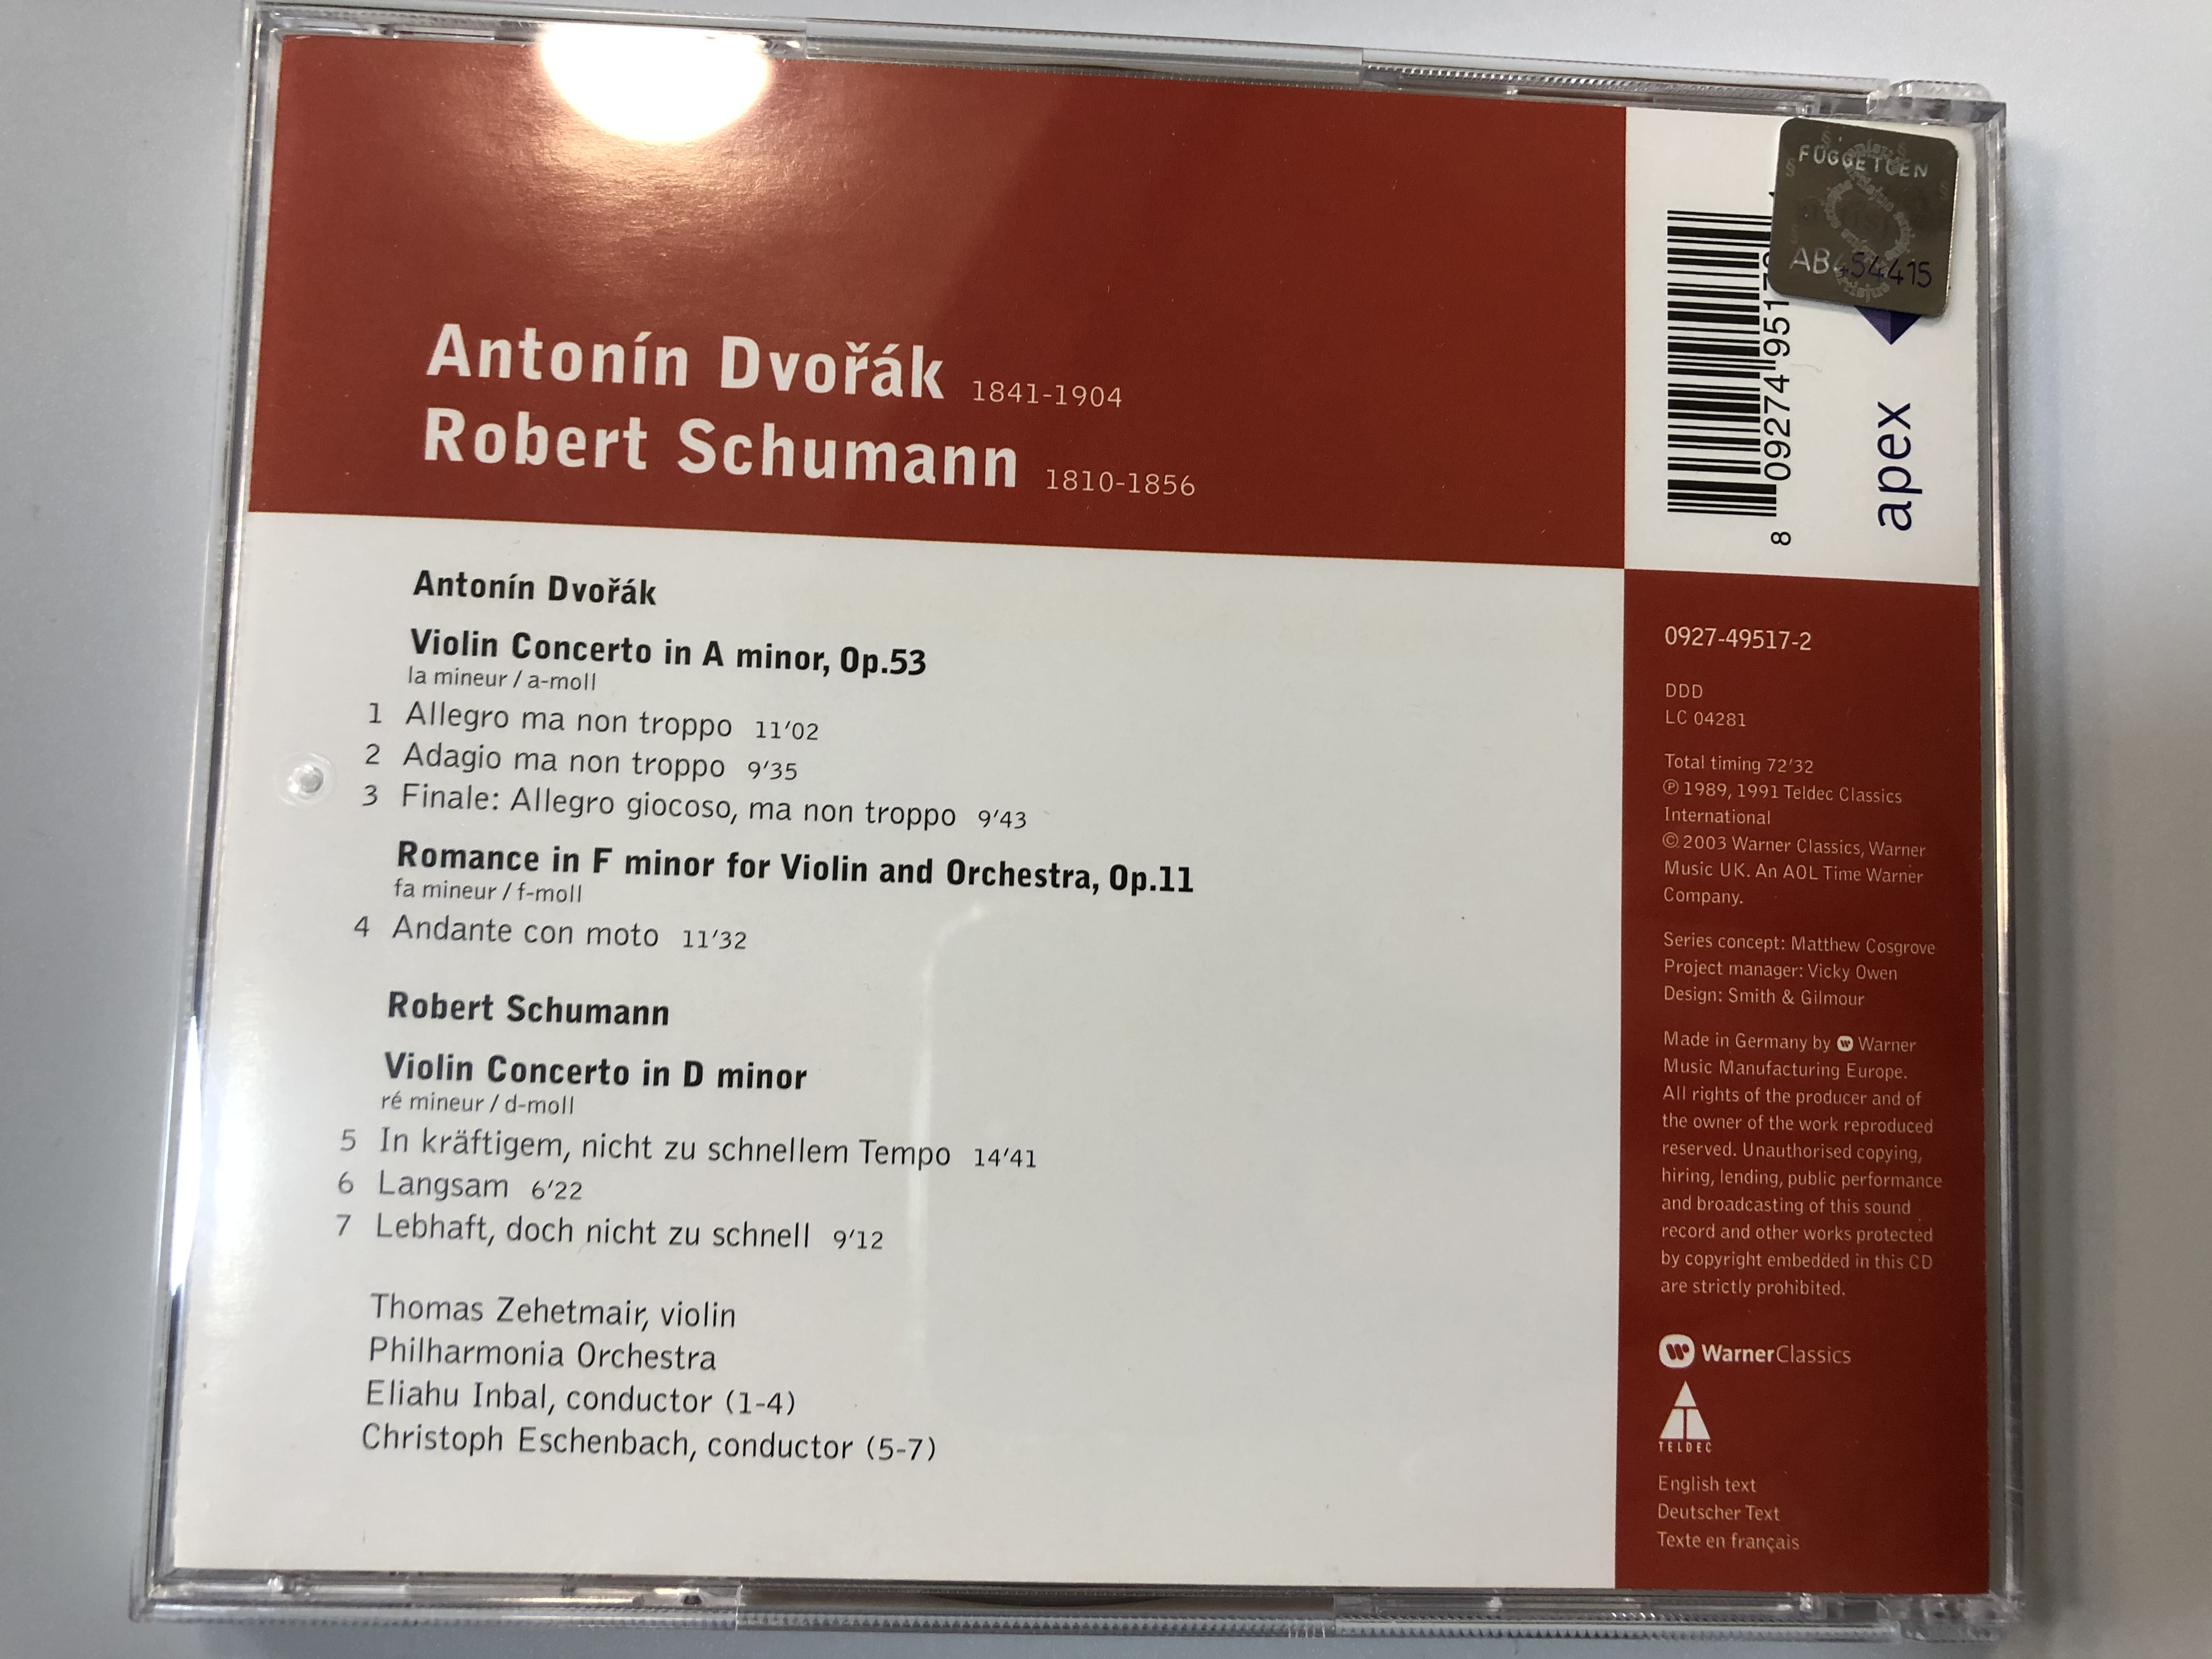 dvo-k-schumann-violin-concertos-thomas-zehetmair-philharmonia-orchestra-christoph-eschenbach-apex-audio-cd-2003-0927-49517-2-2-.jpg